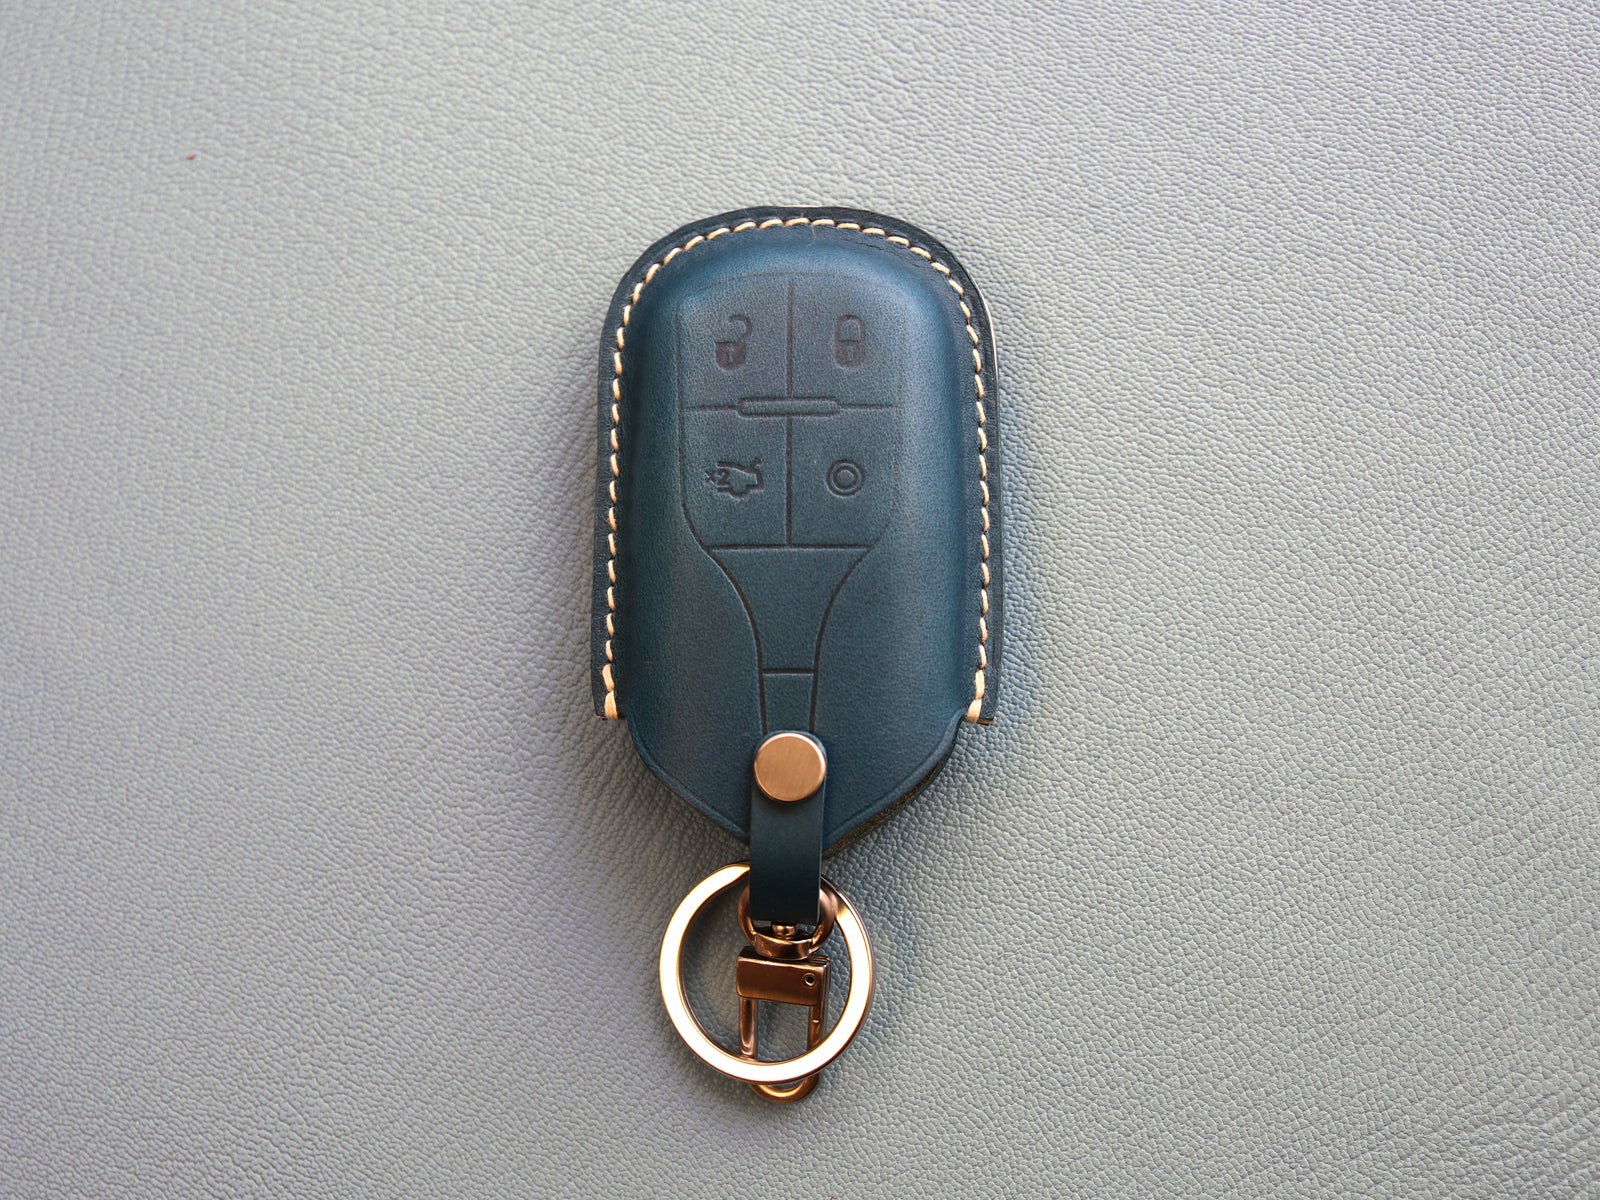 Genesis [1-4] Leather Key fob Cover- G70 G80 G90 Keycase Remote